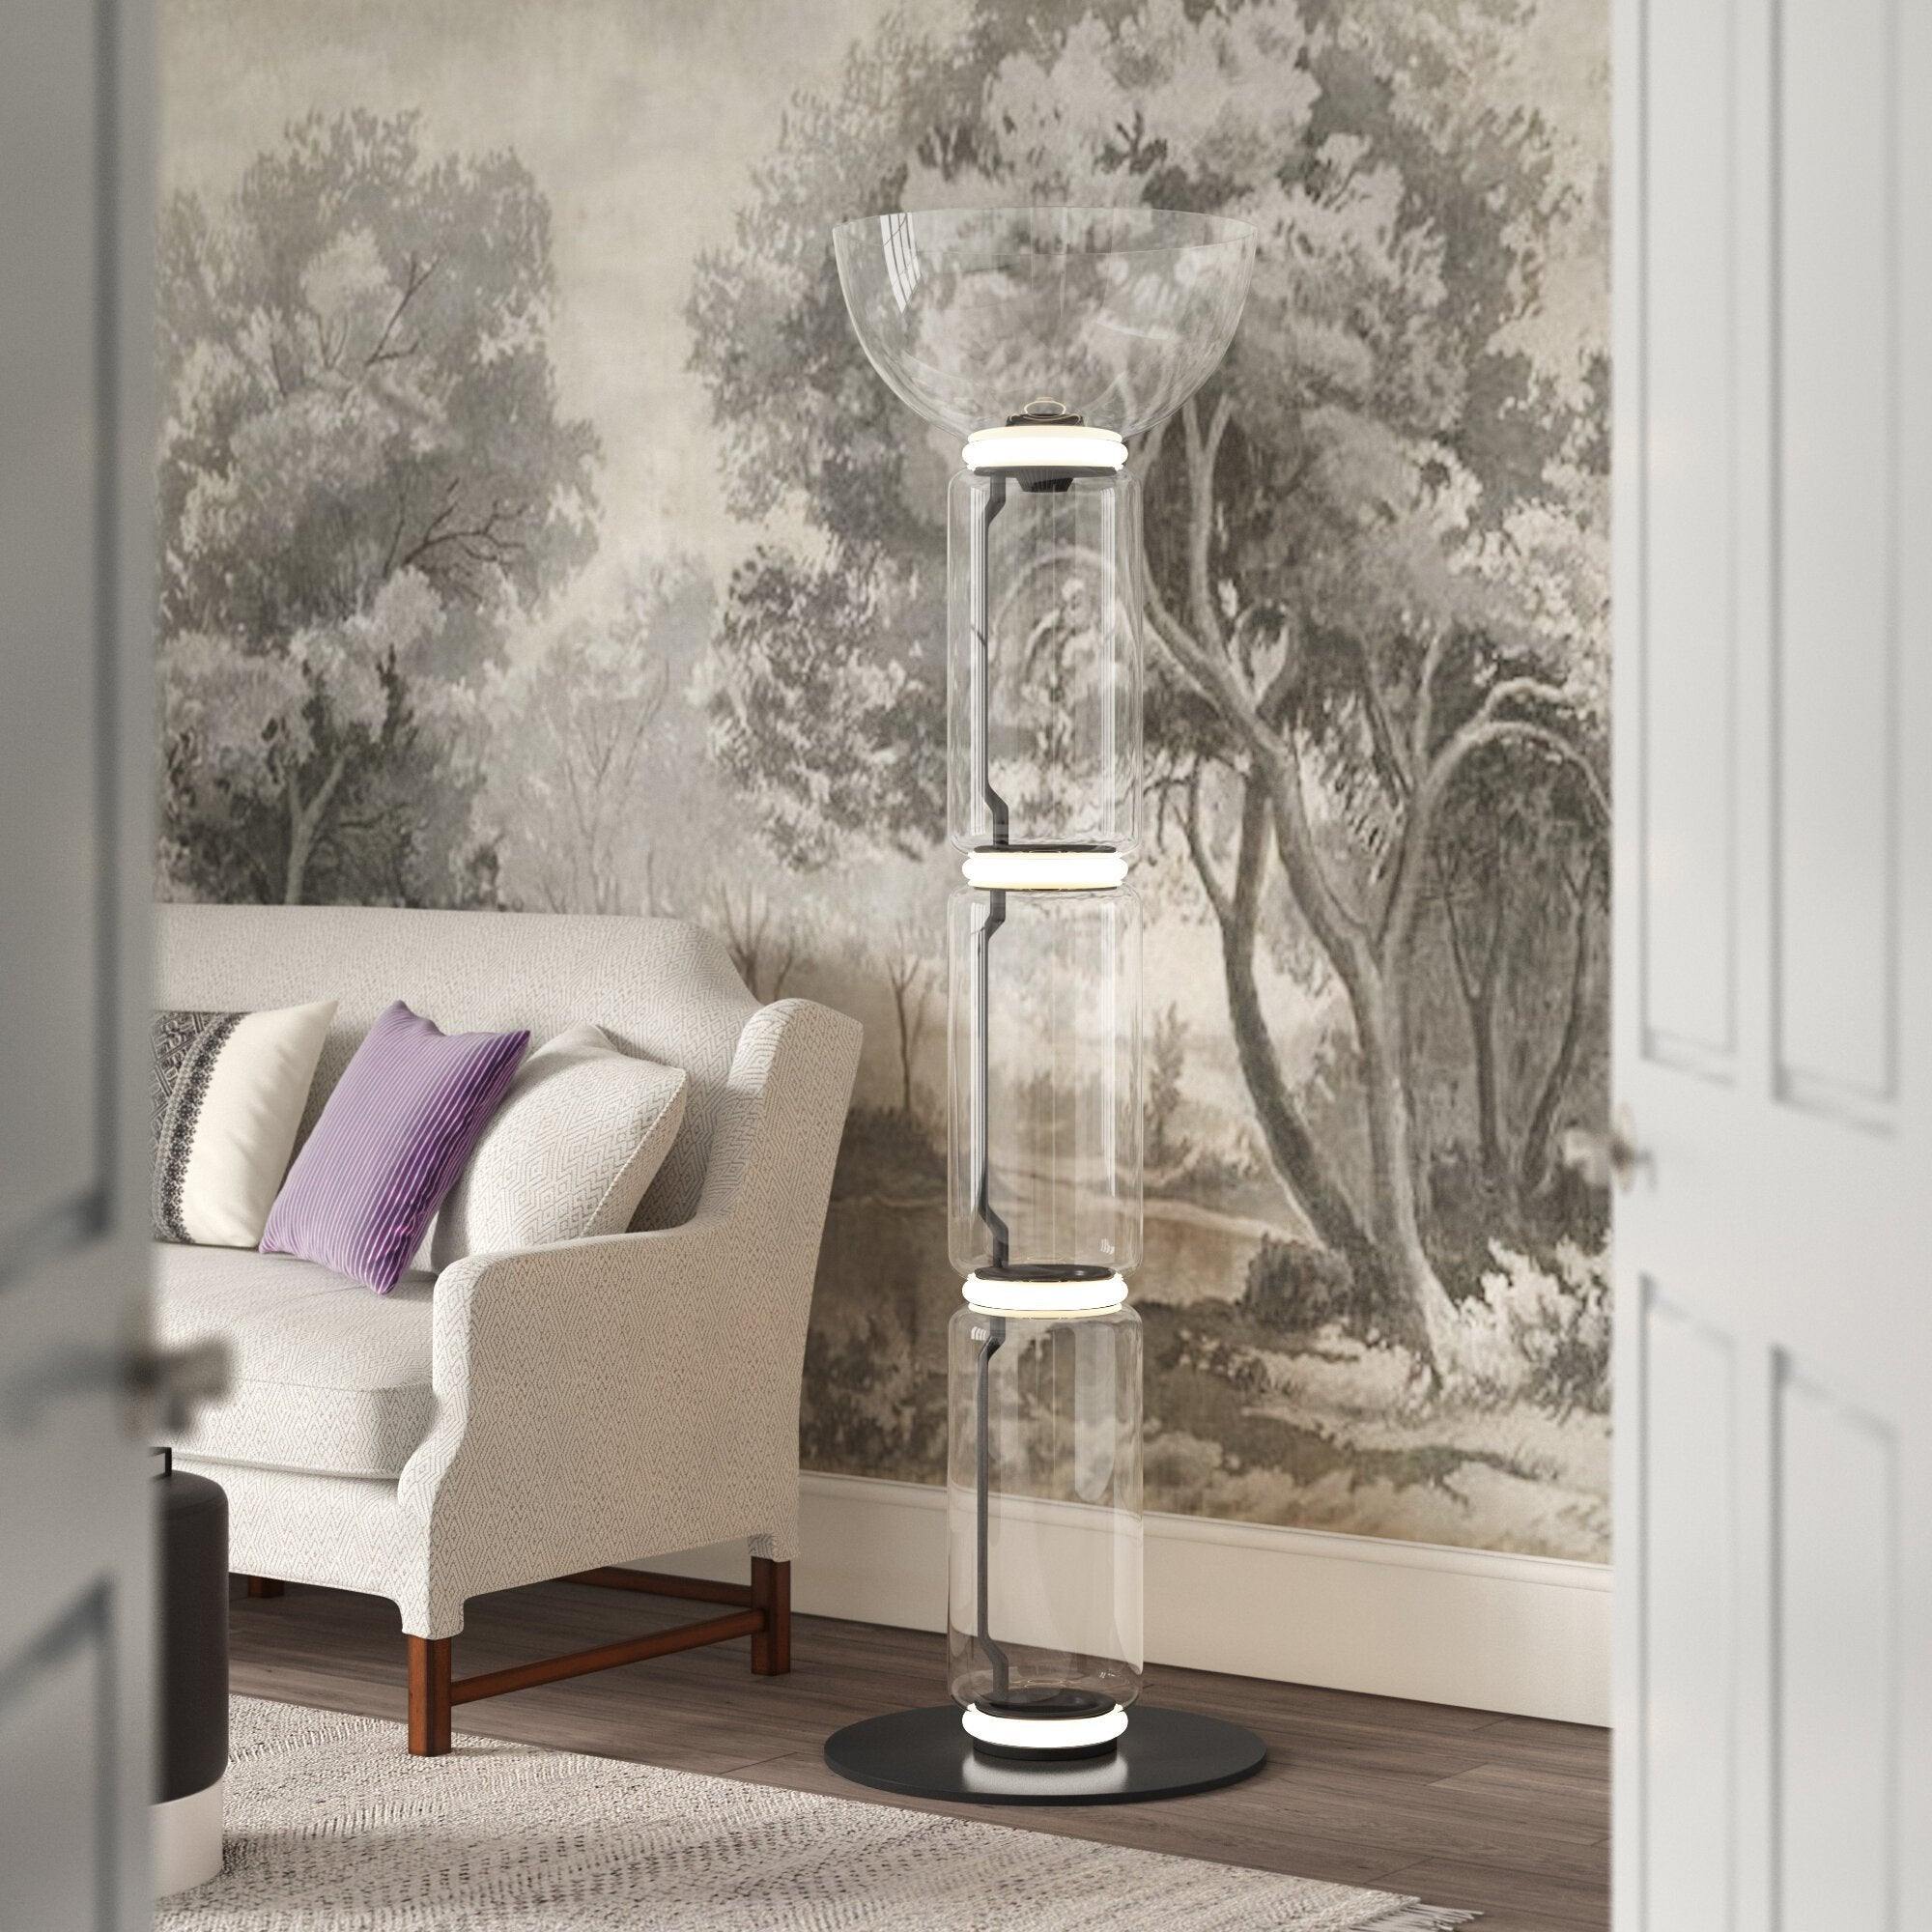 Noctambule Table & Floor Lamp 